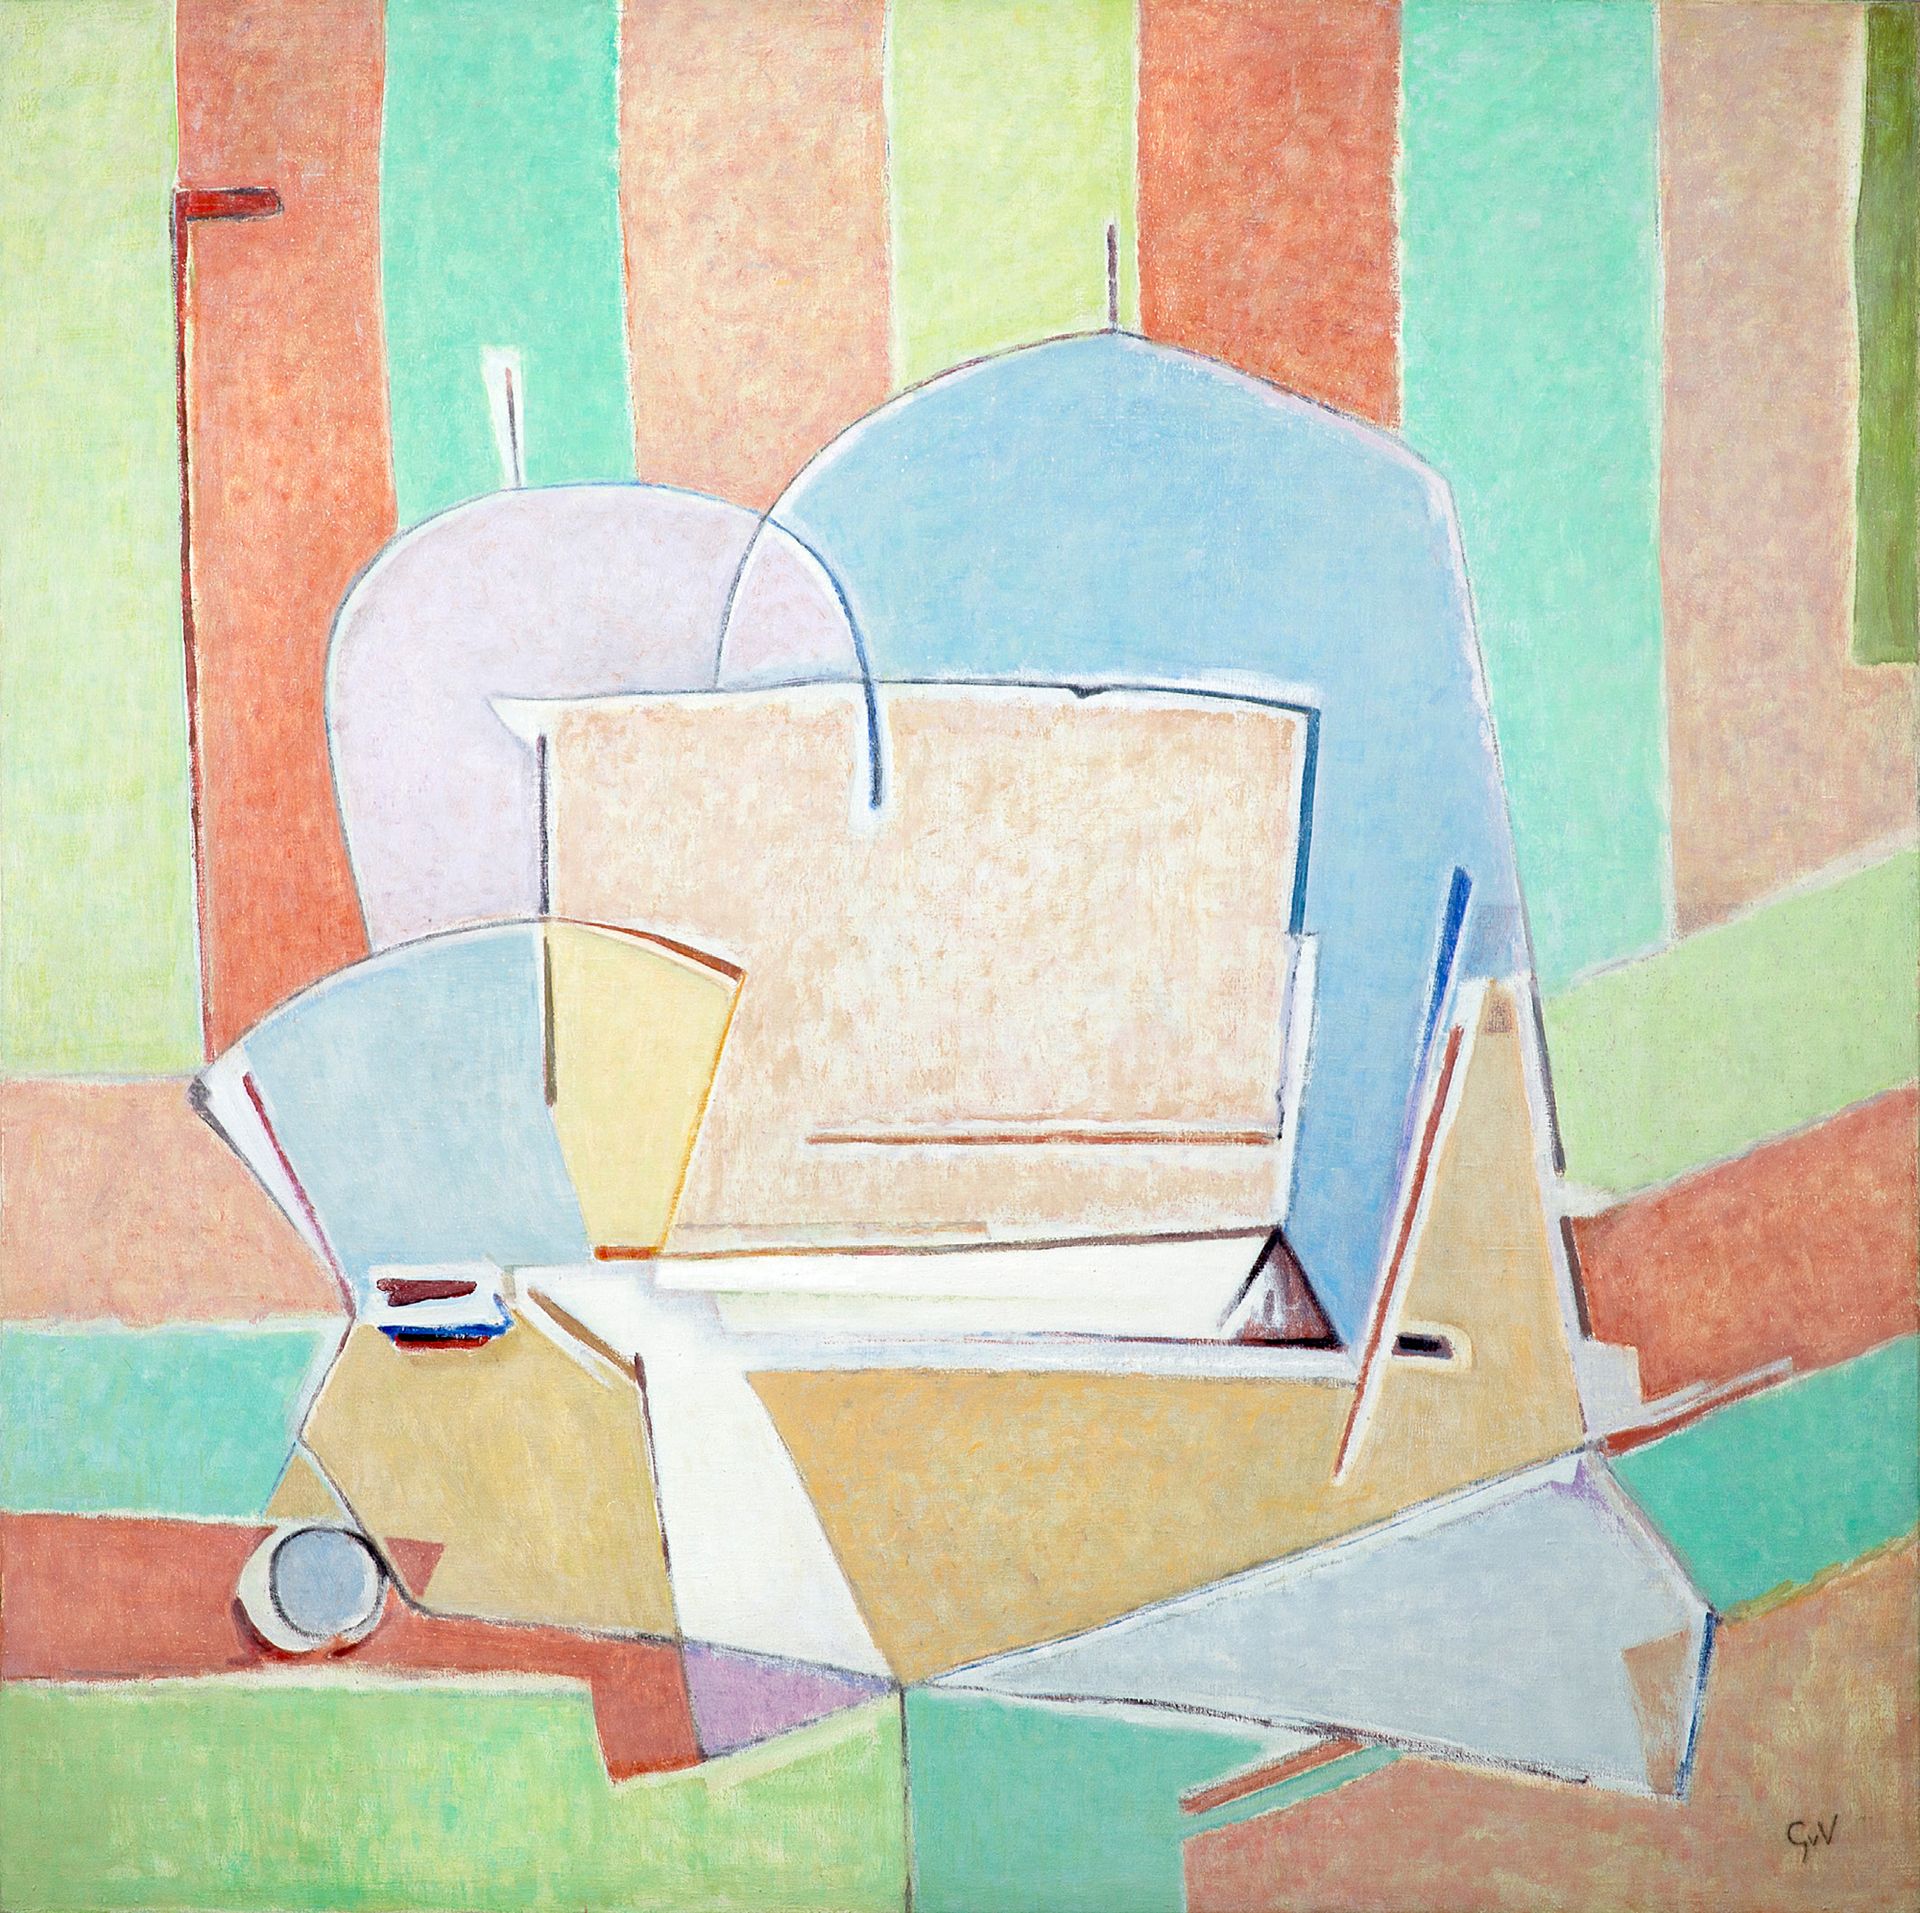 GEER VAN VELDE (1898-1977) 
Composición, c. 1961 

Óleo sobre lienzo, firmado co&hellip;